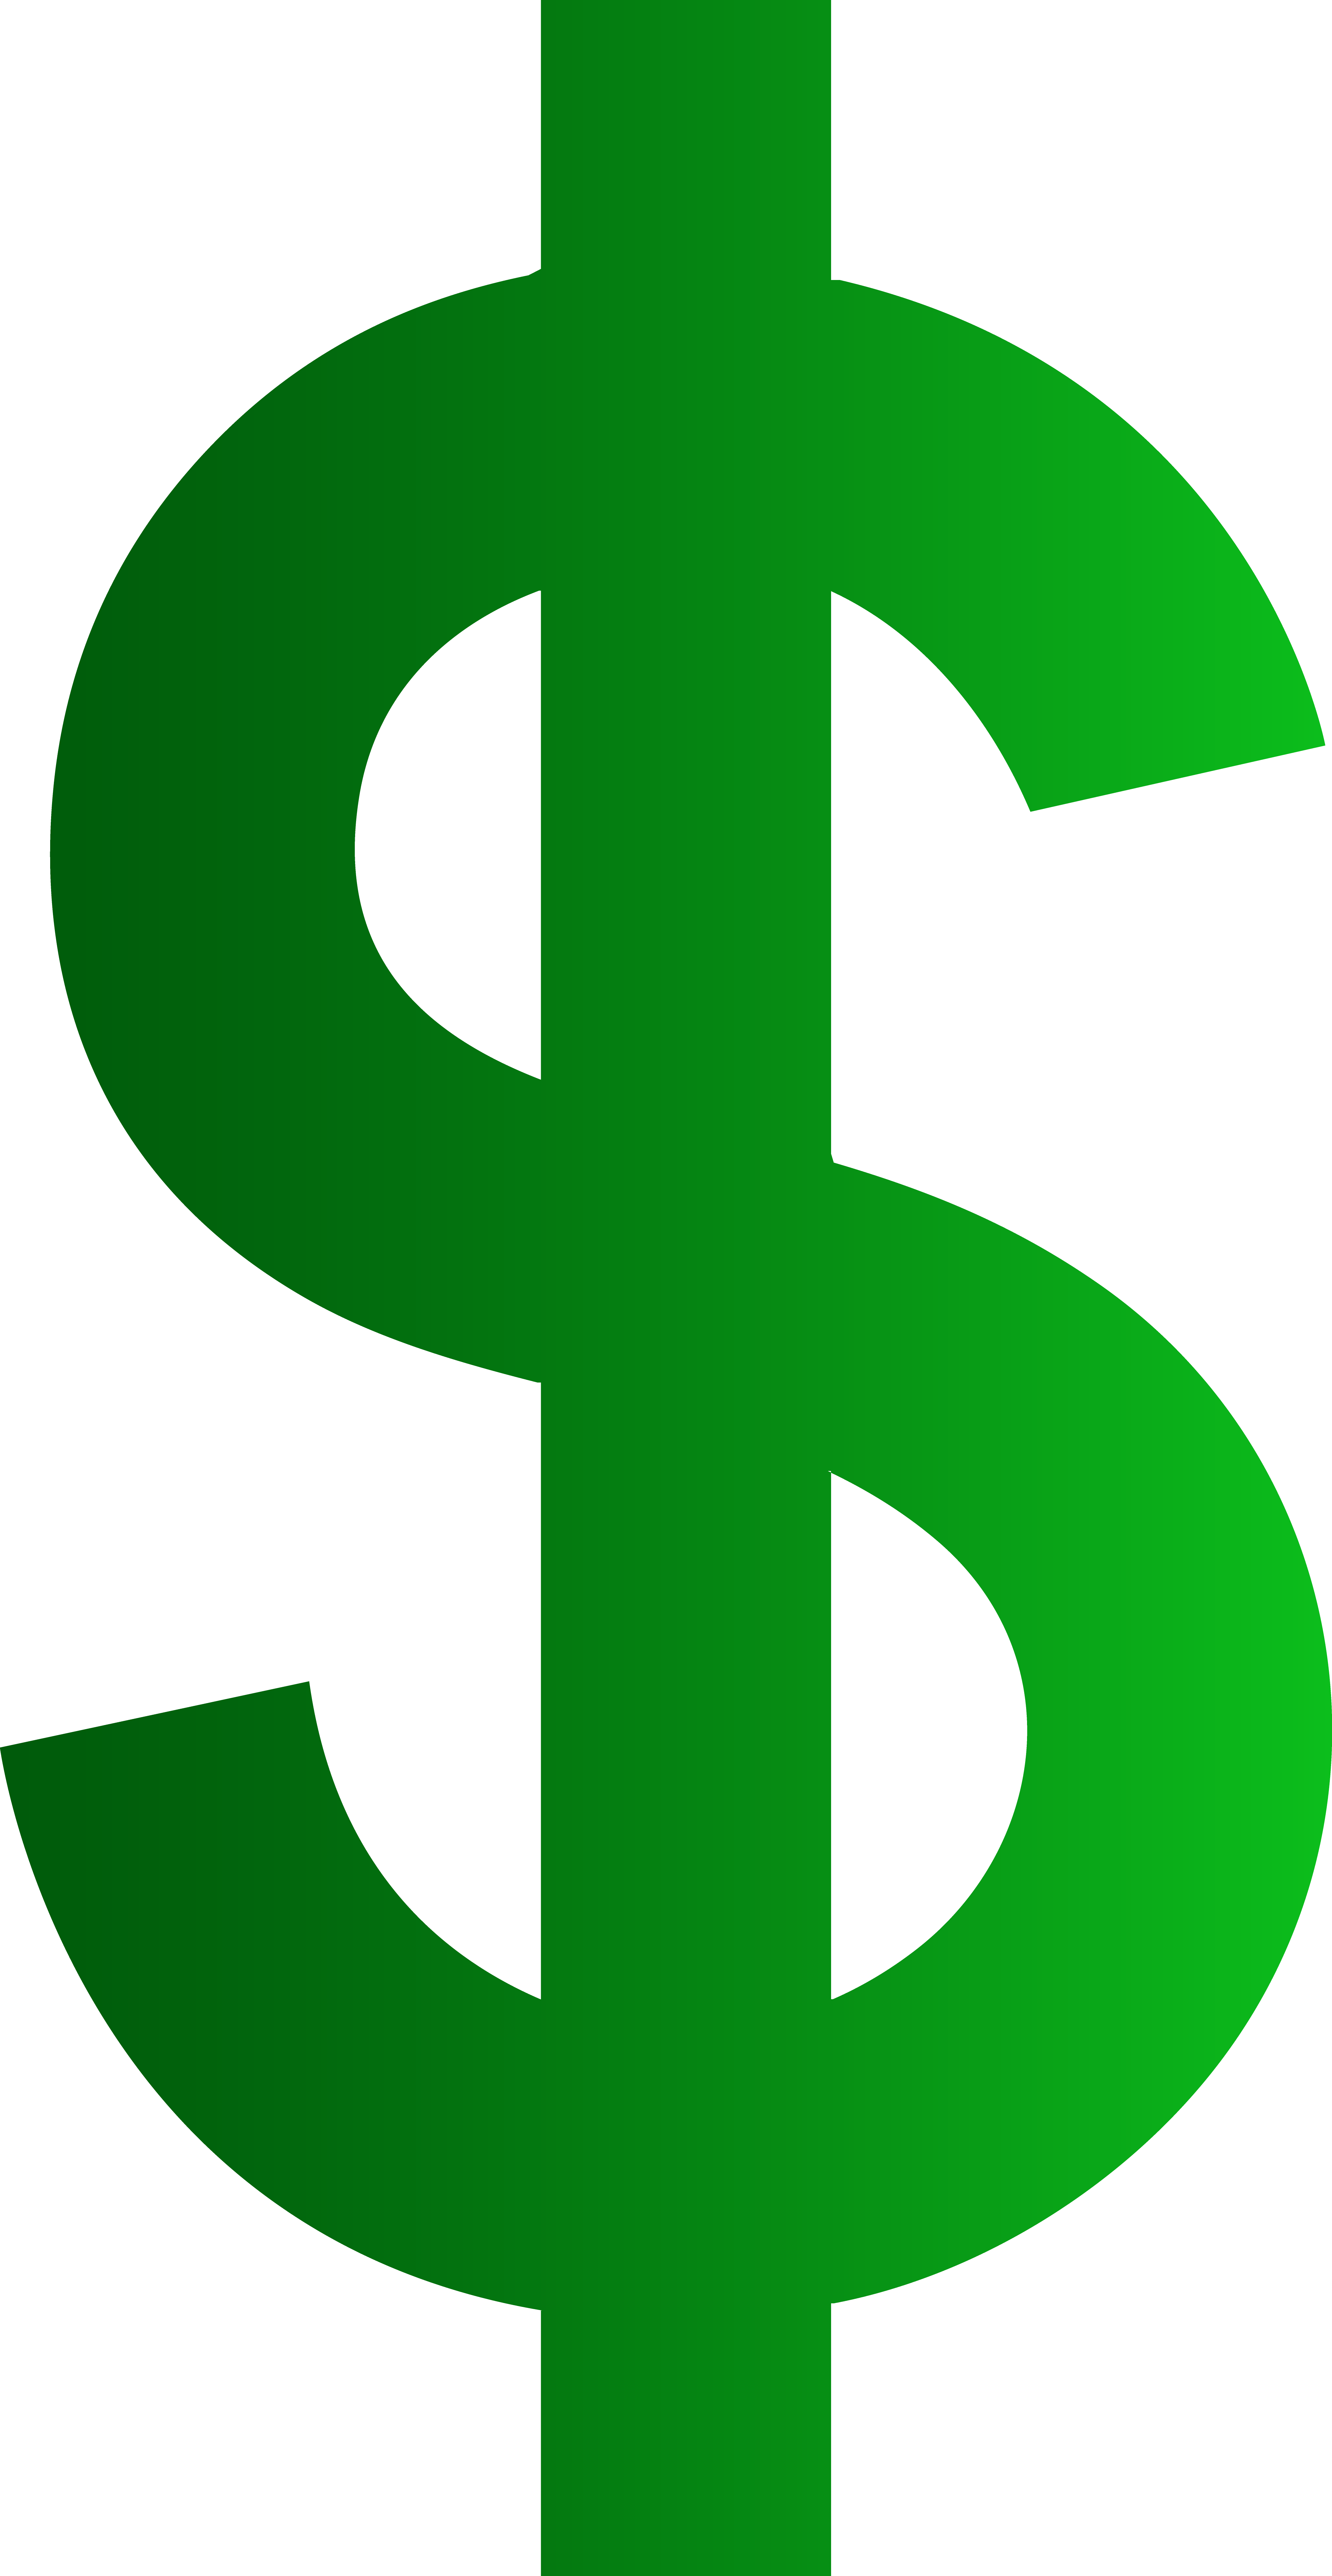 Green Dollar Symbol Image PNG Image